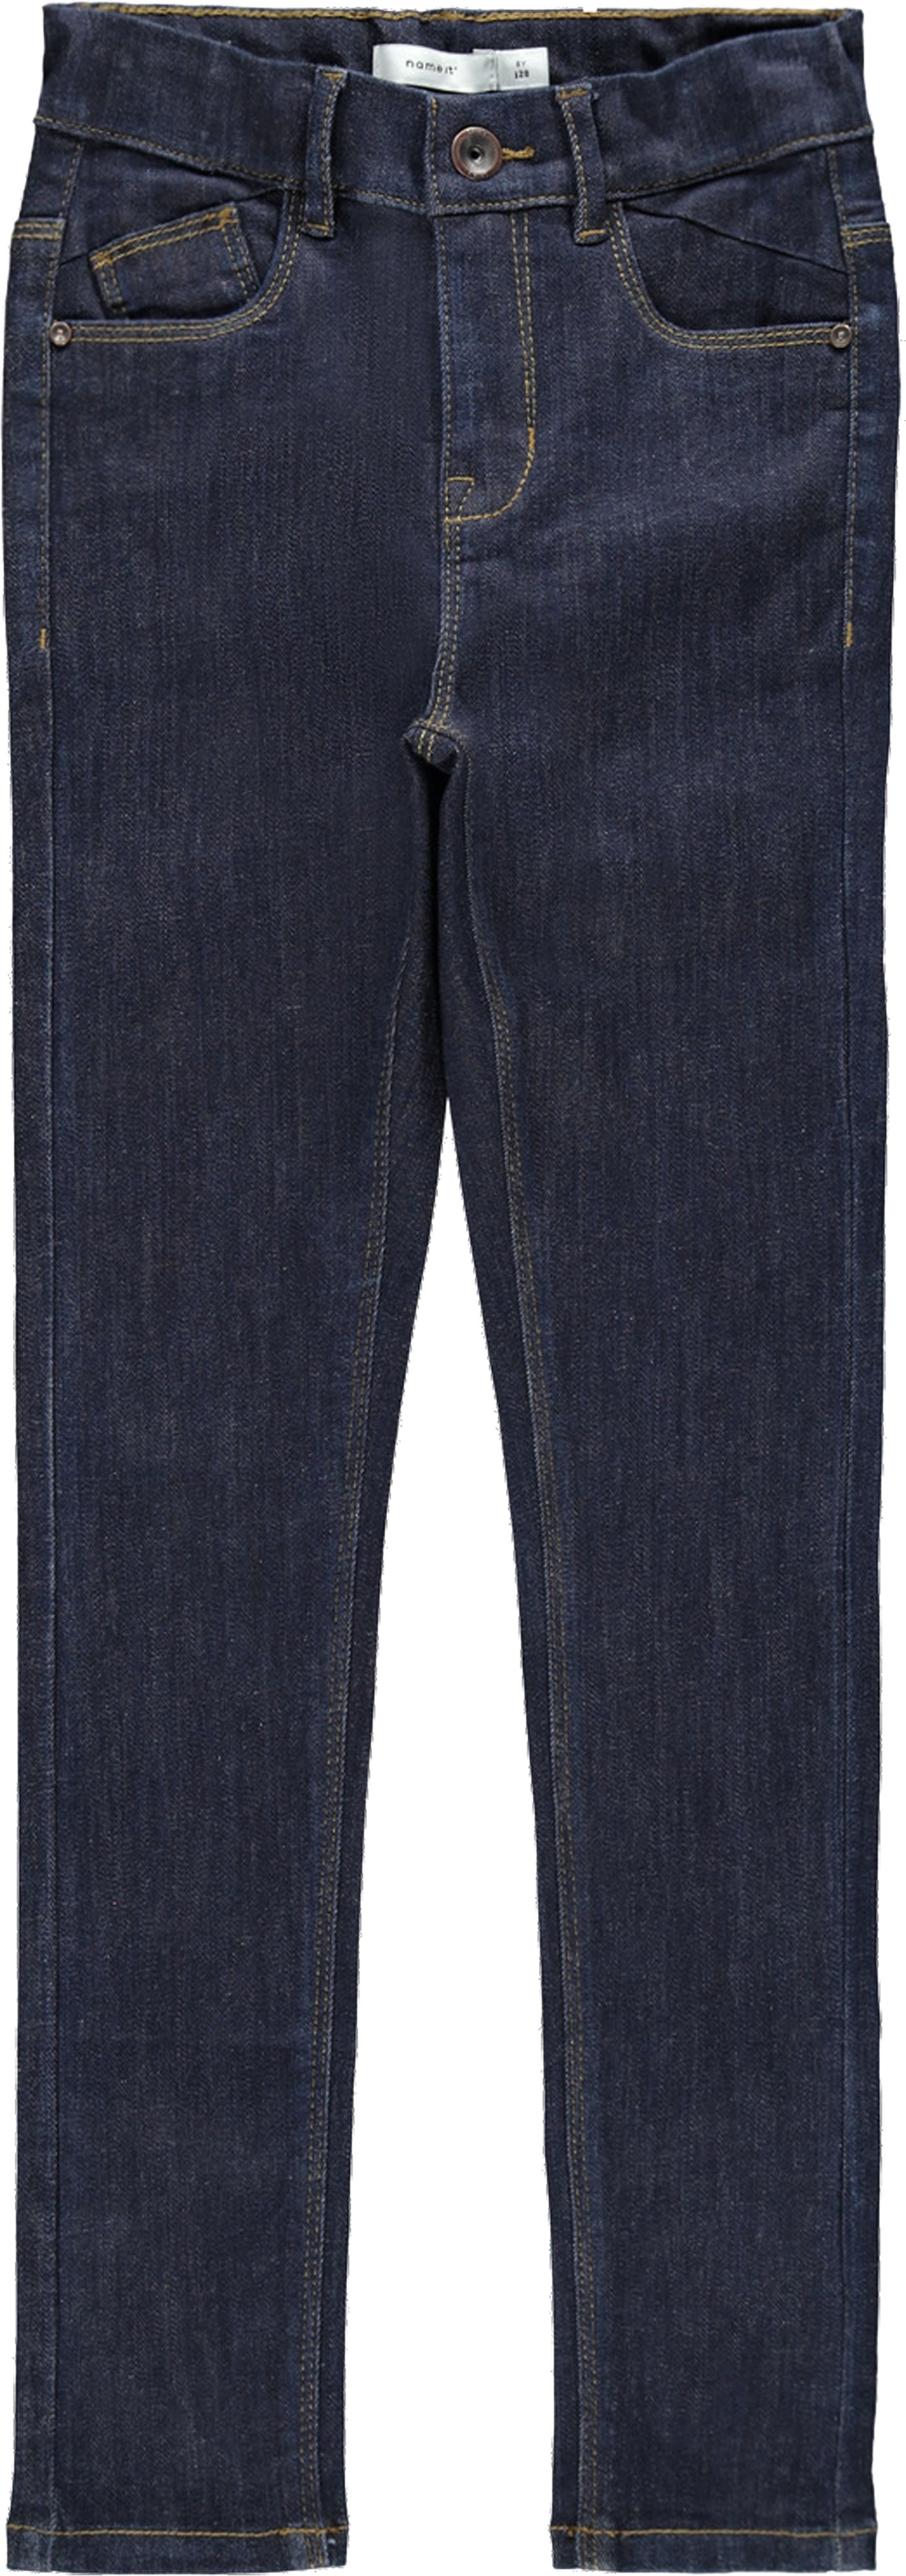 name it Jeans NKFPOLLY DNMTEJAS NOOS dark blue denim shop online at ...